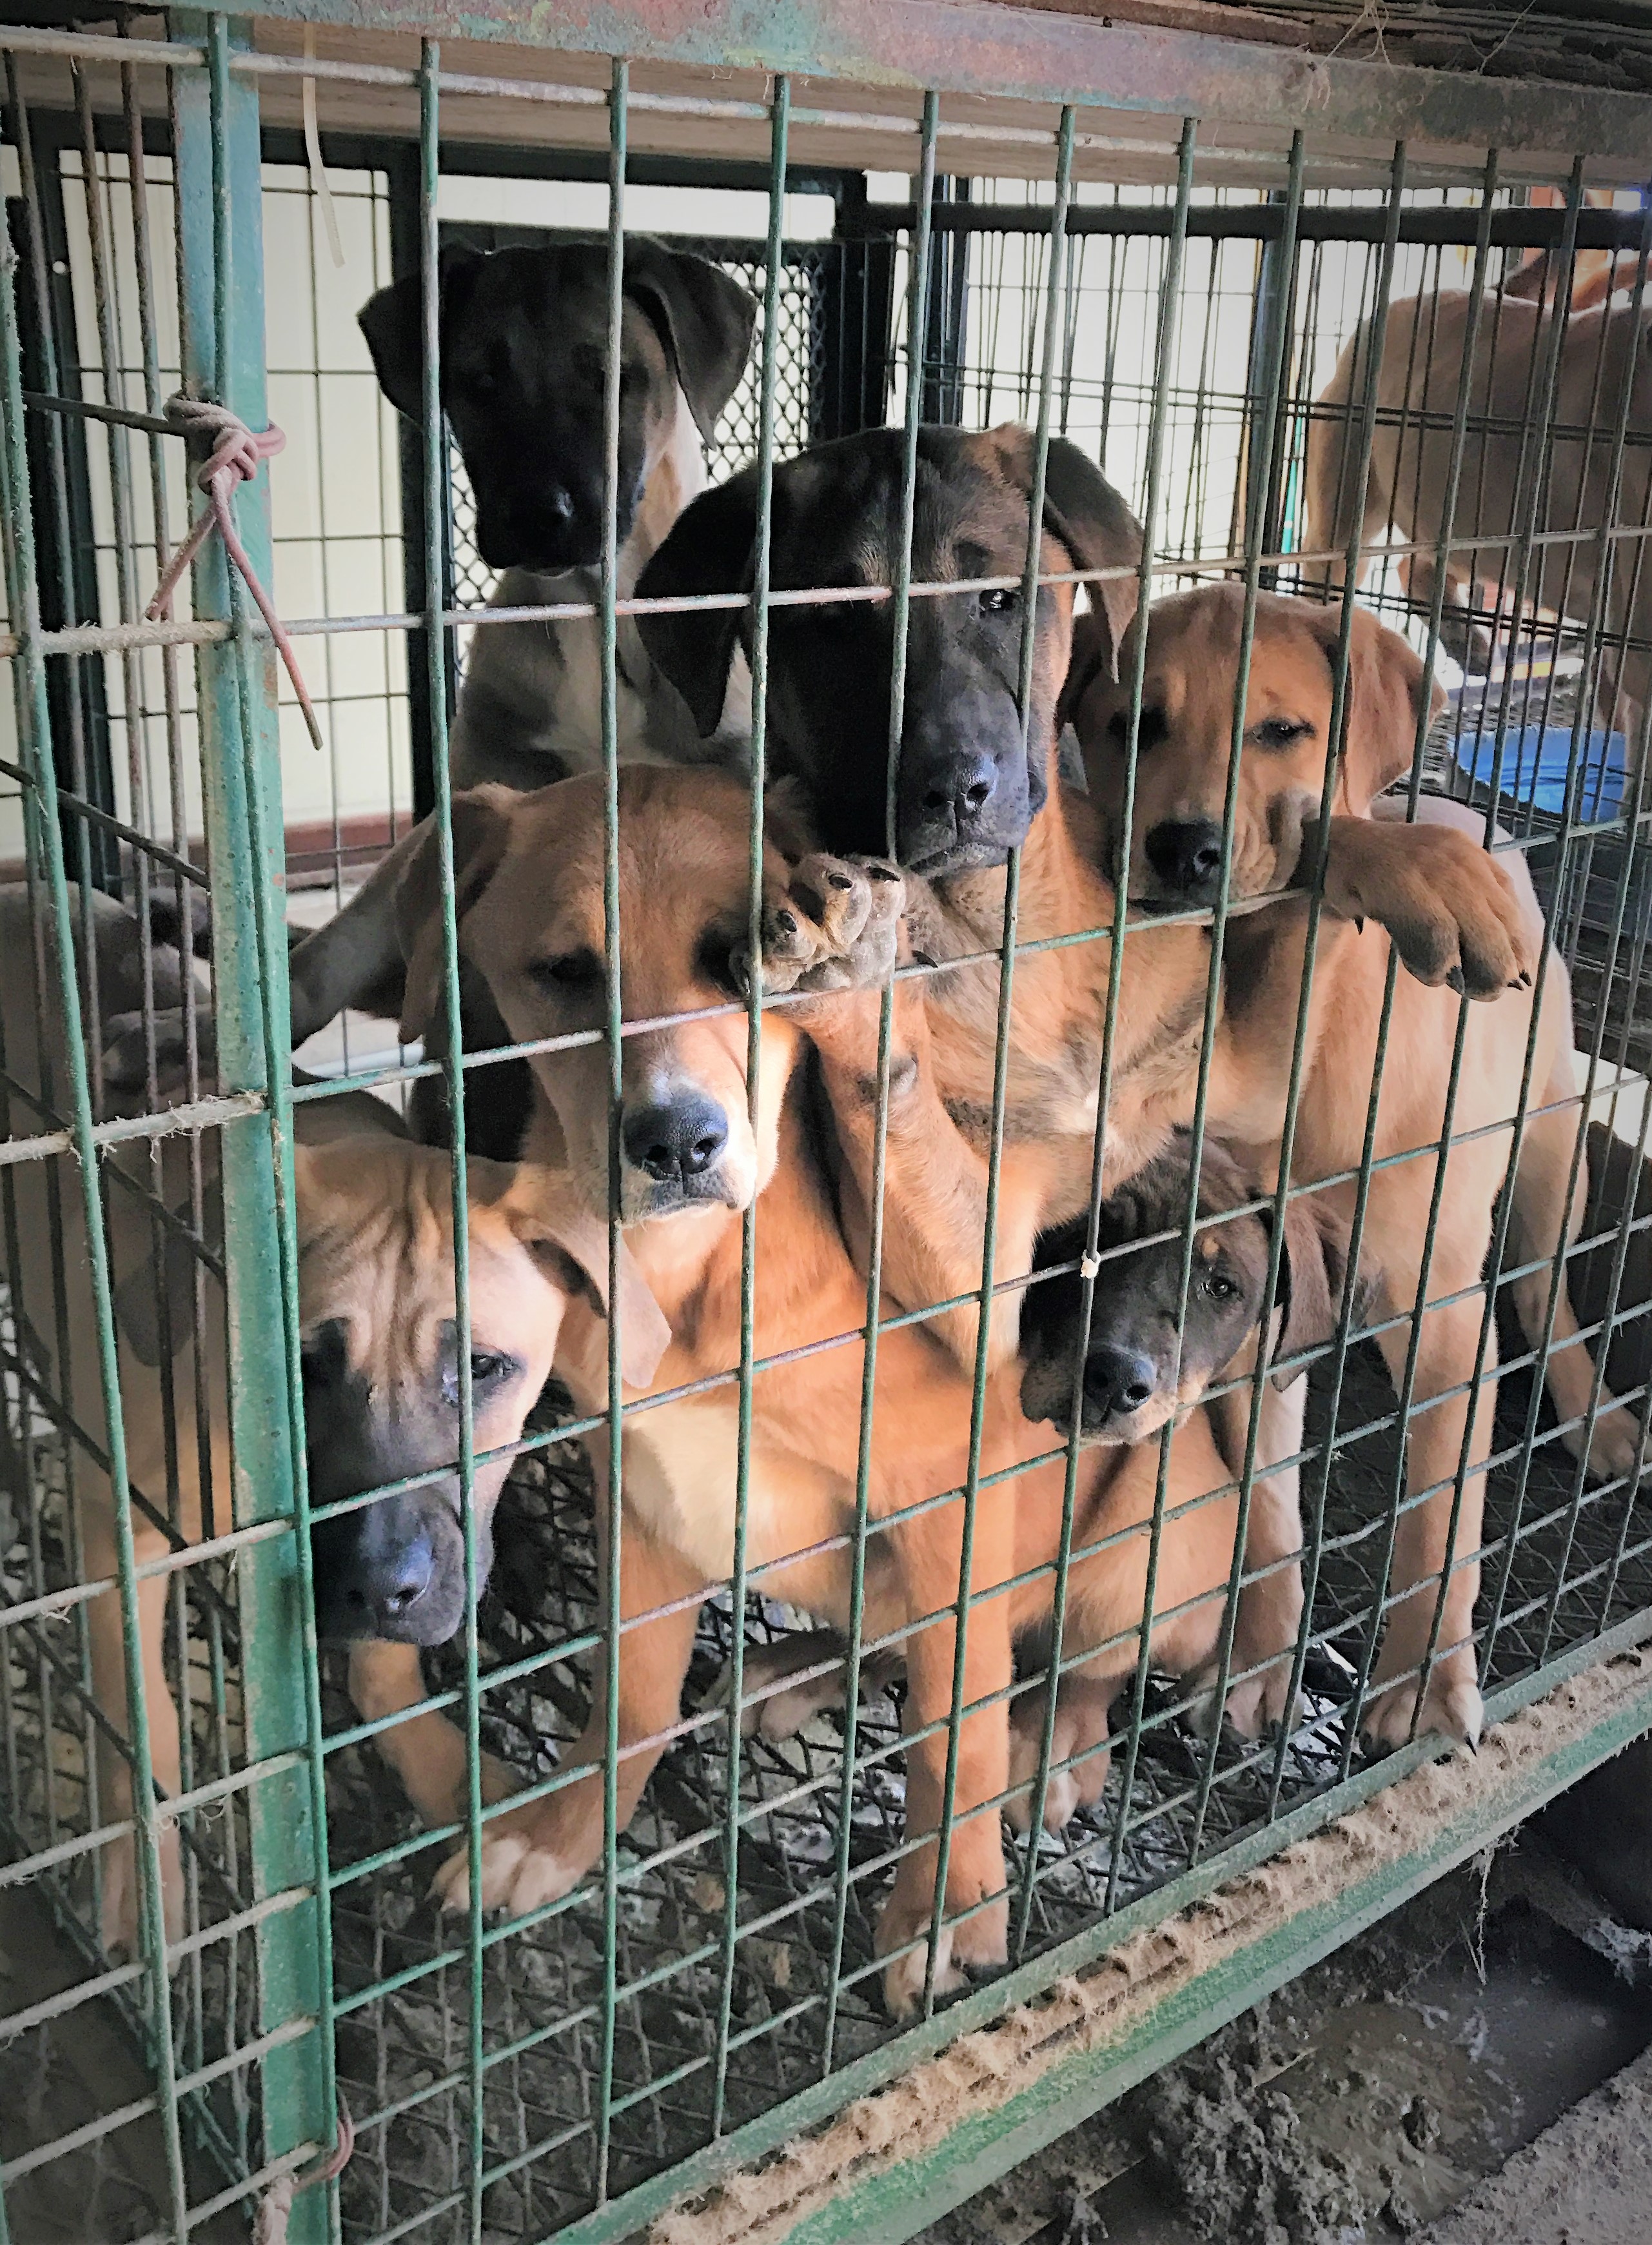 SaveKoreanDogs need your partnership to save the Korean dogs.